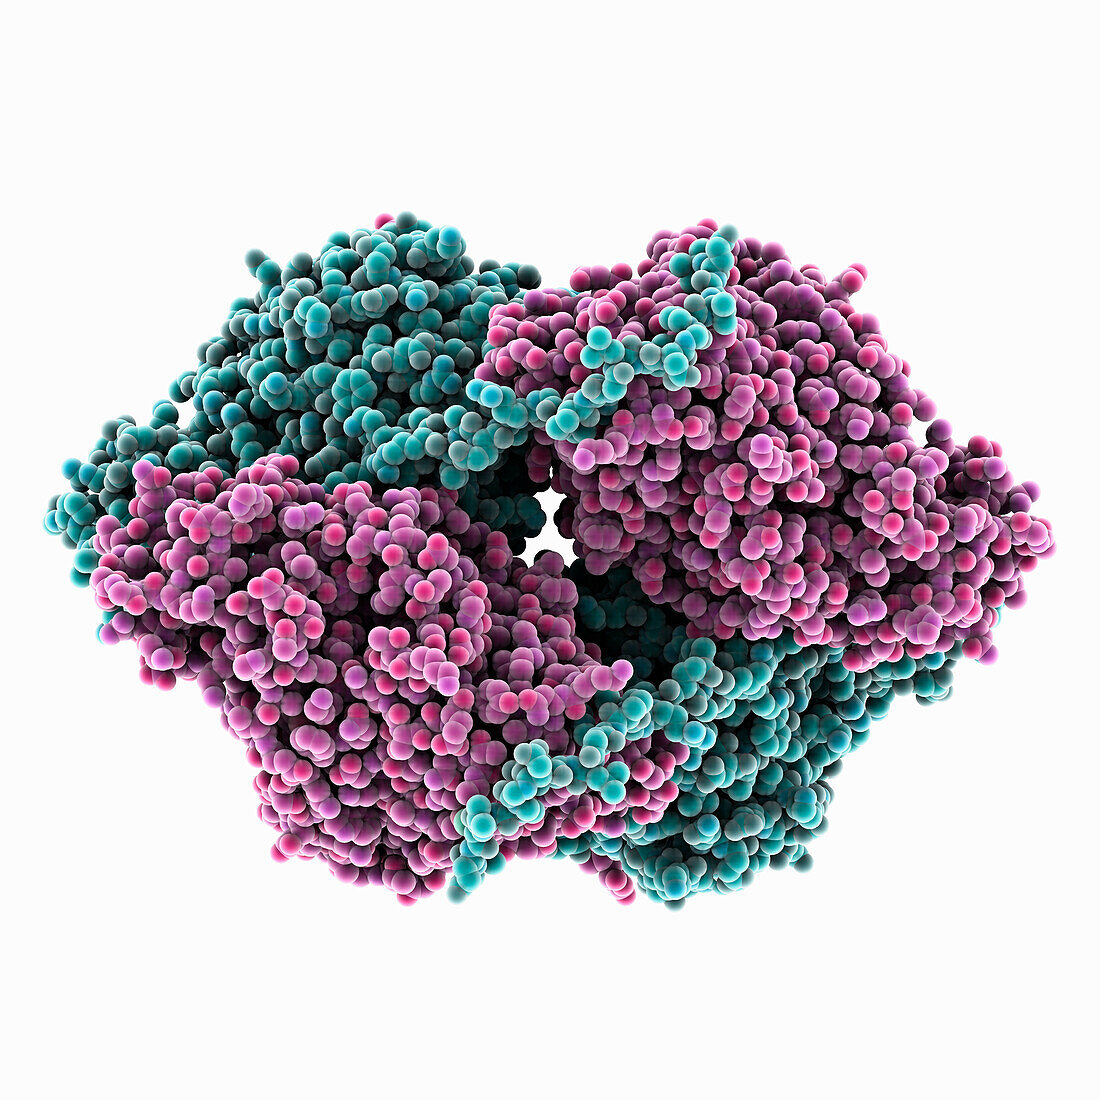 Dihydropyrimidinase-related protein, illustration